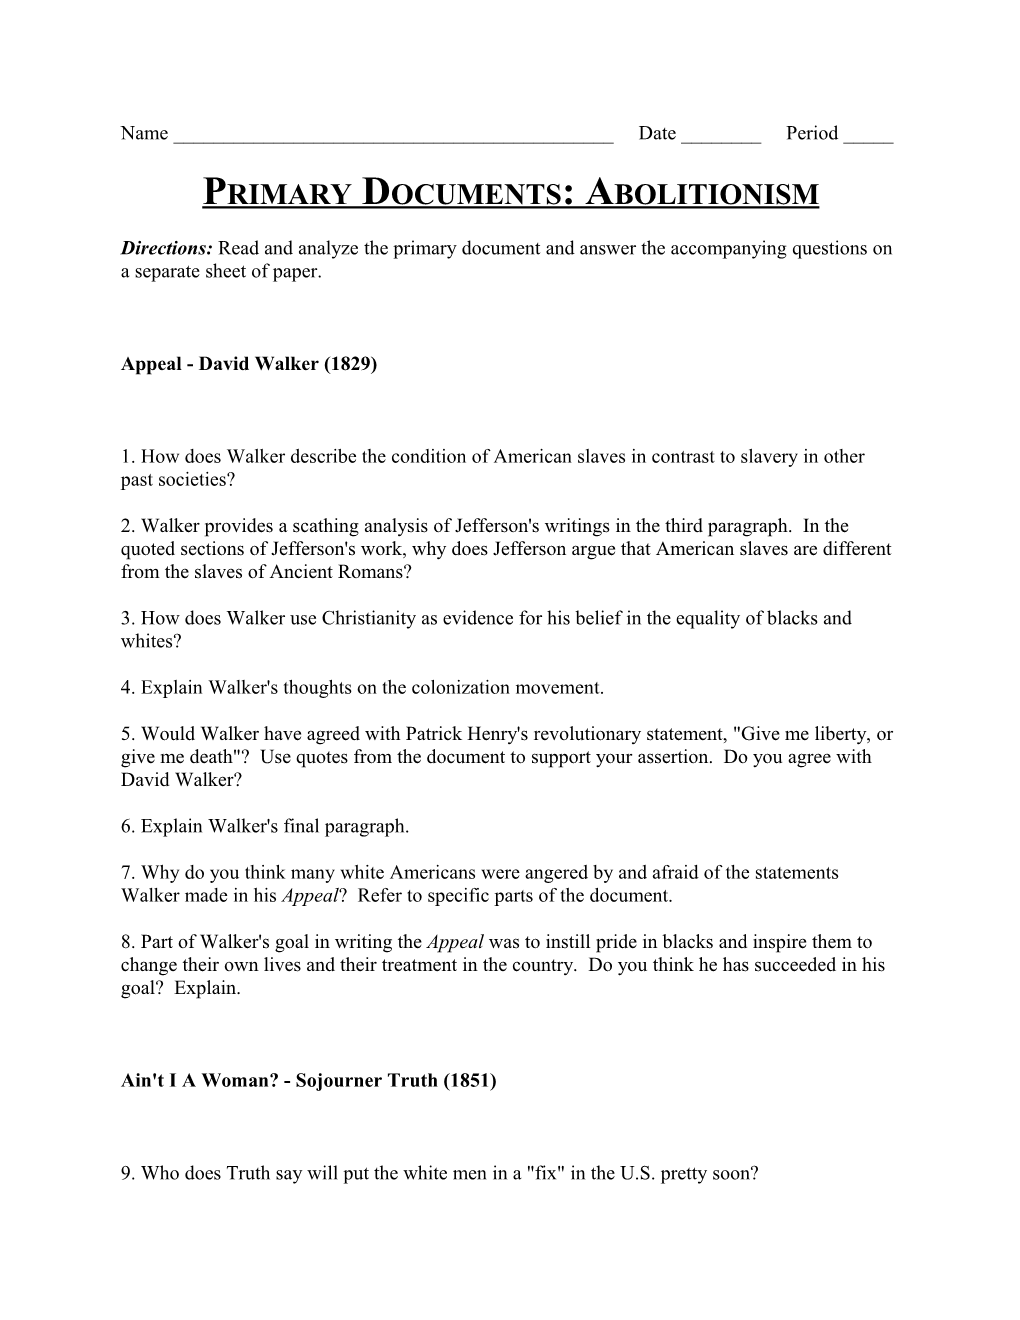 Primary Documents: Abolitionism